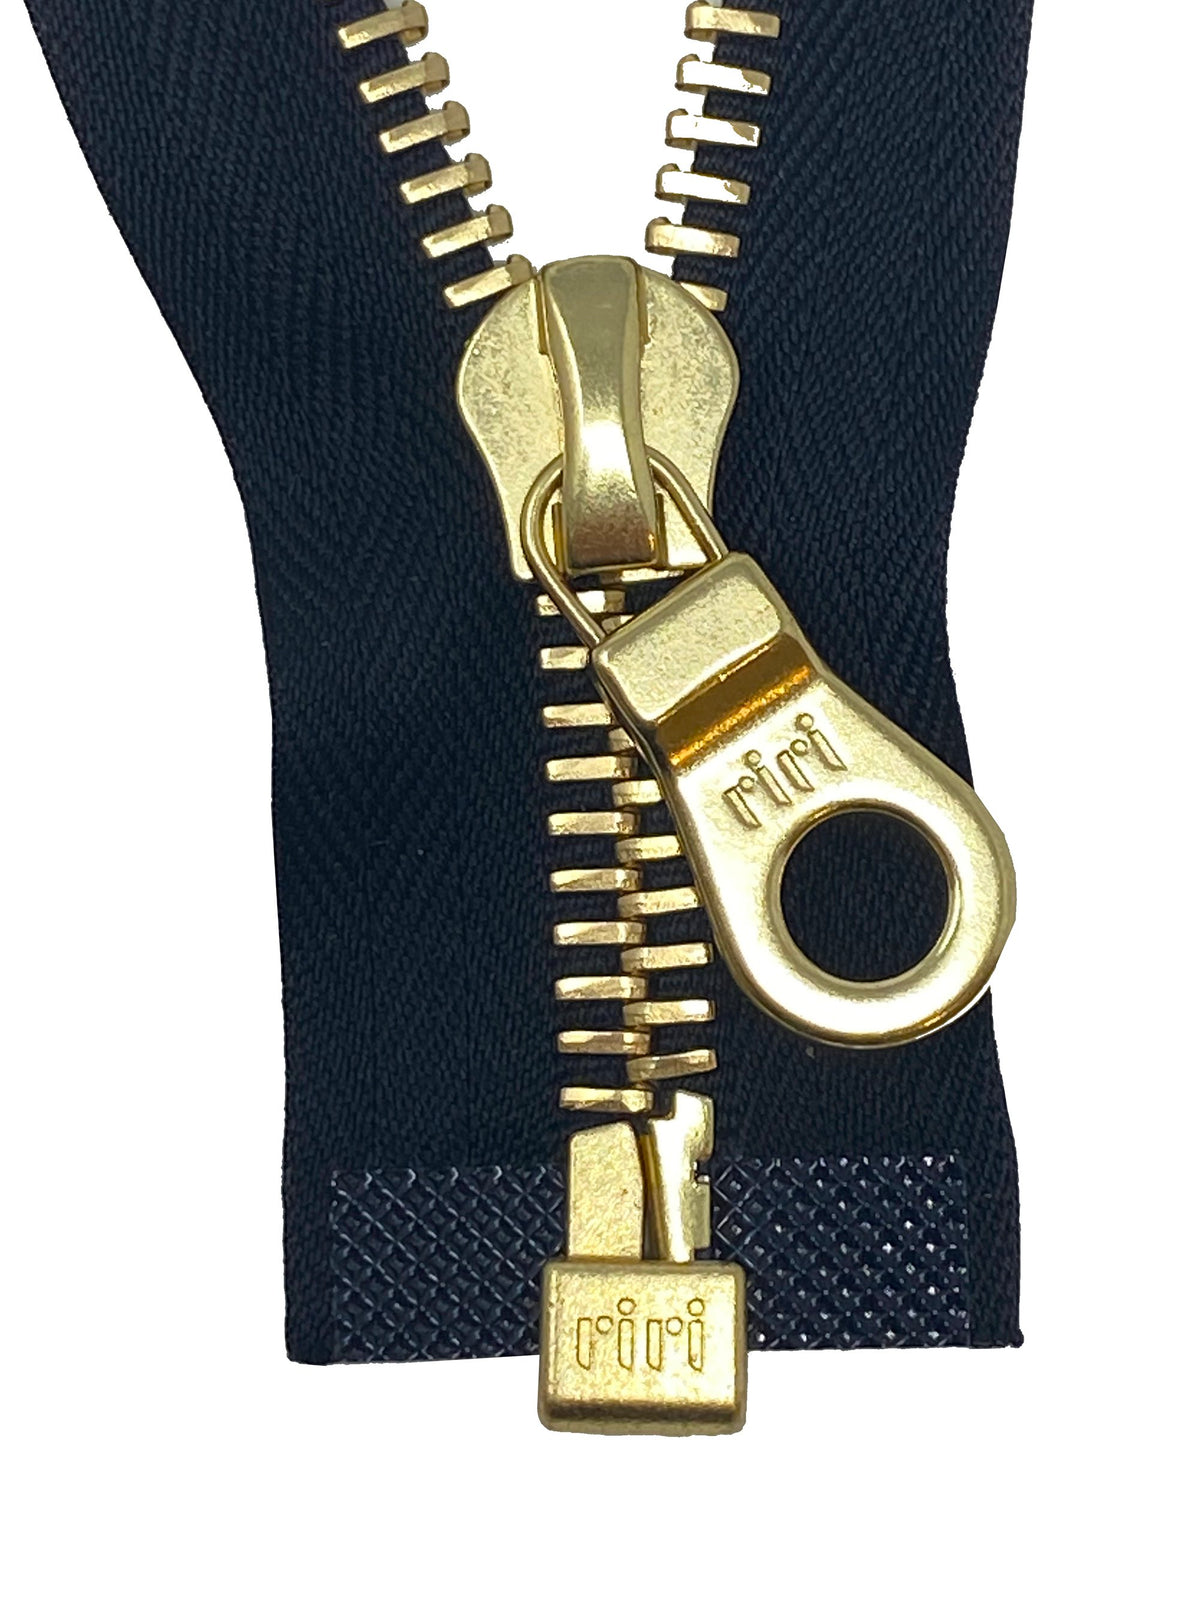 YKK Sportswear Coil Zipper 27 Inch Outerwear Jacket Zipper YKK 5 Nylon Coil  Light Weight Separating End by Each Select Color 